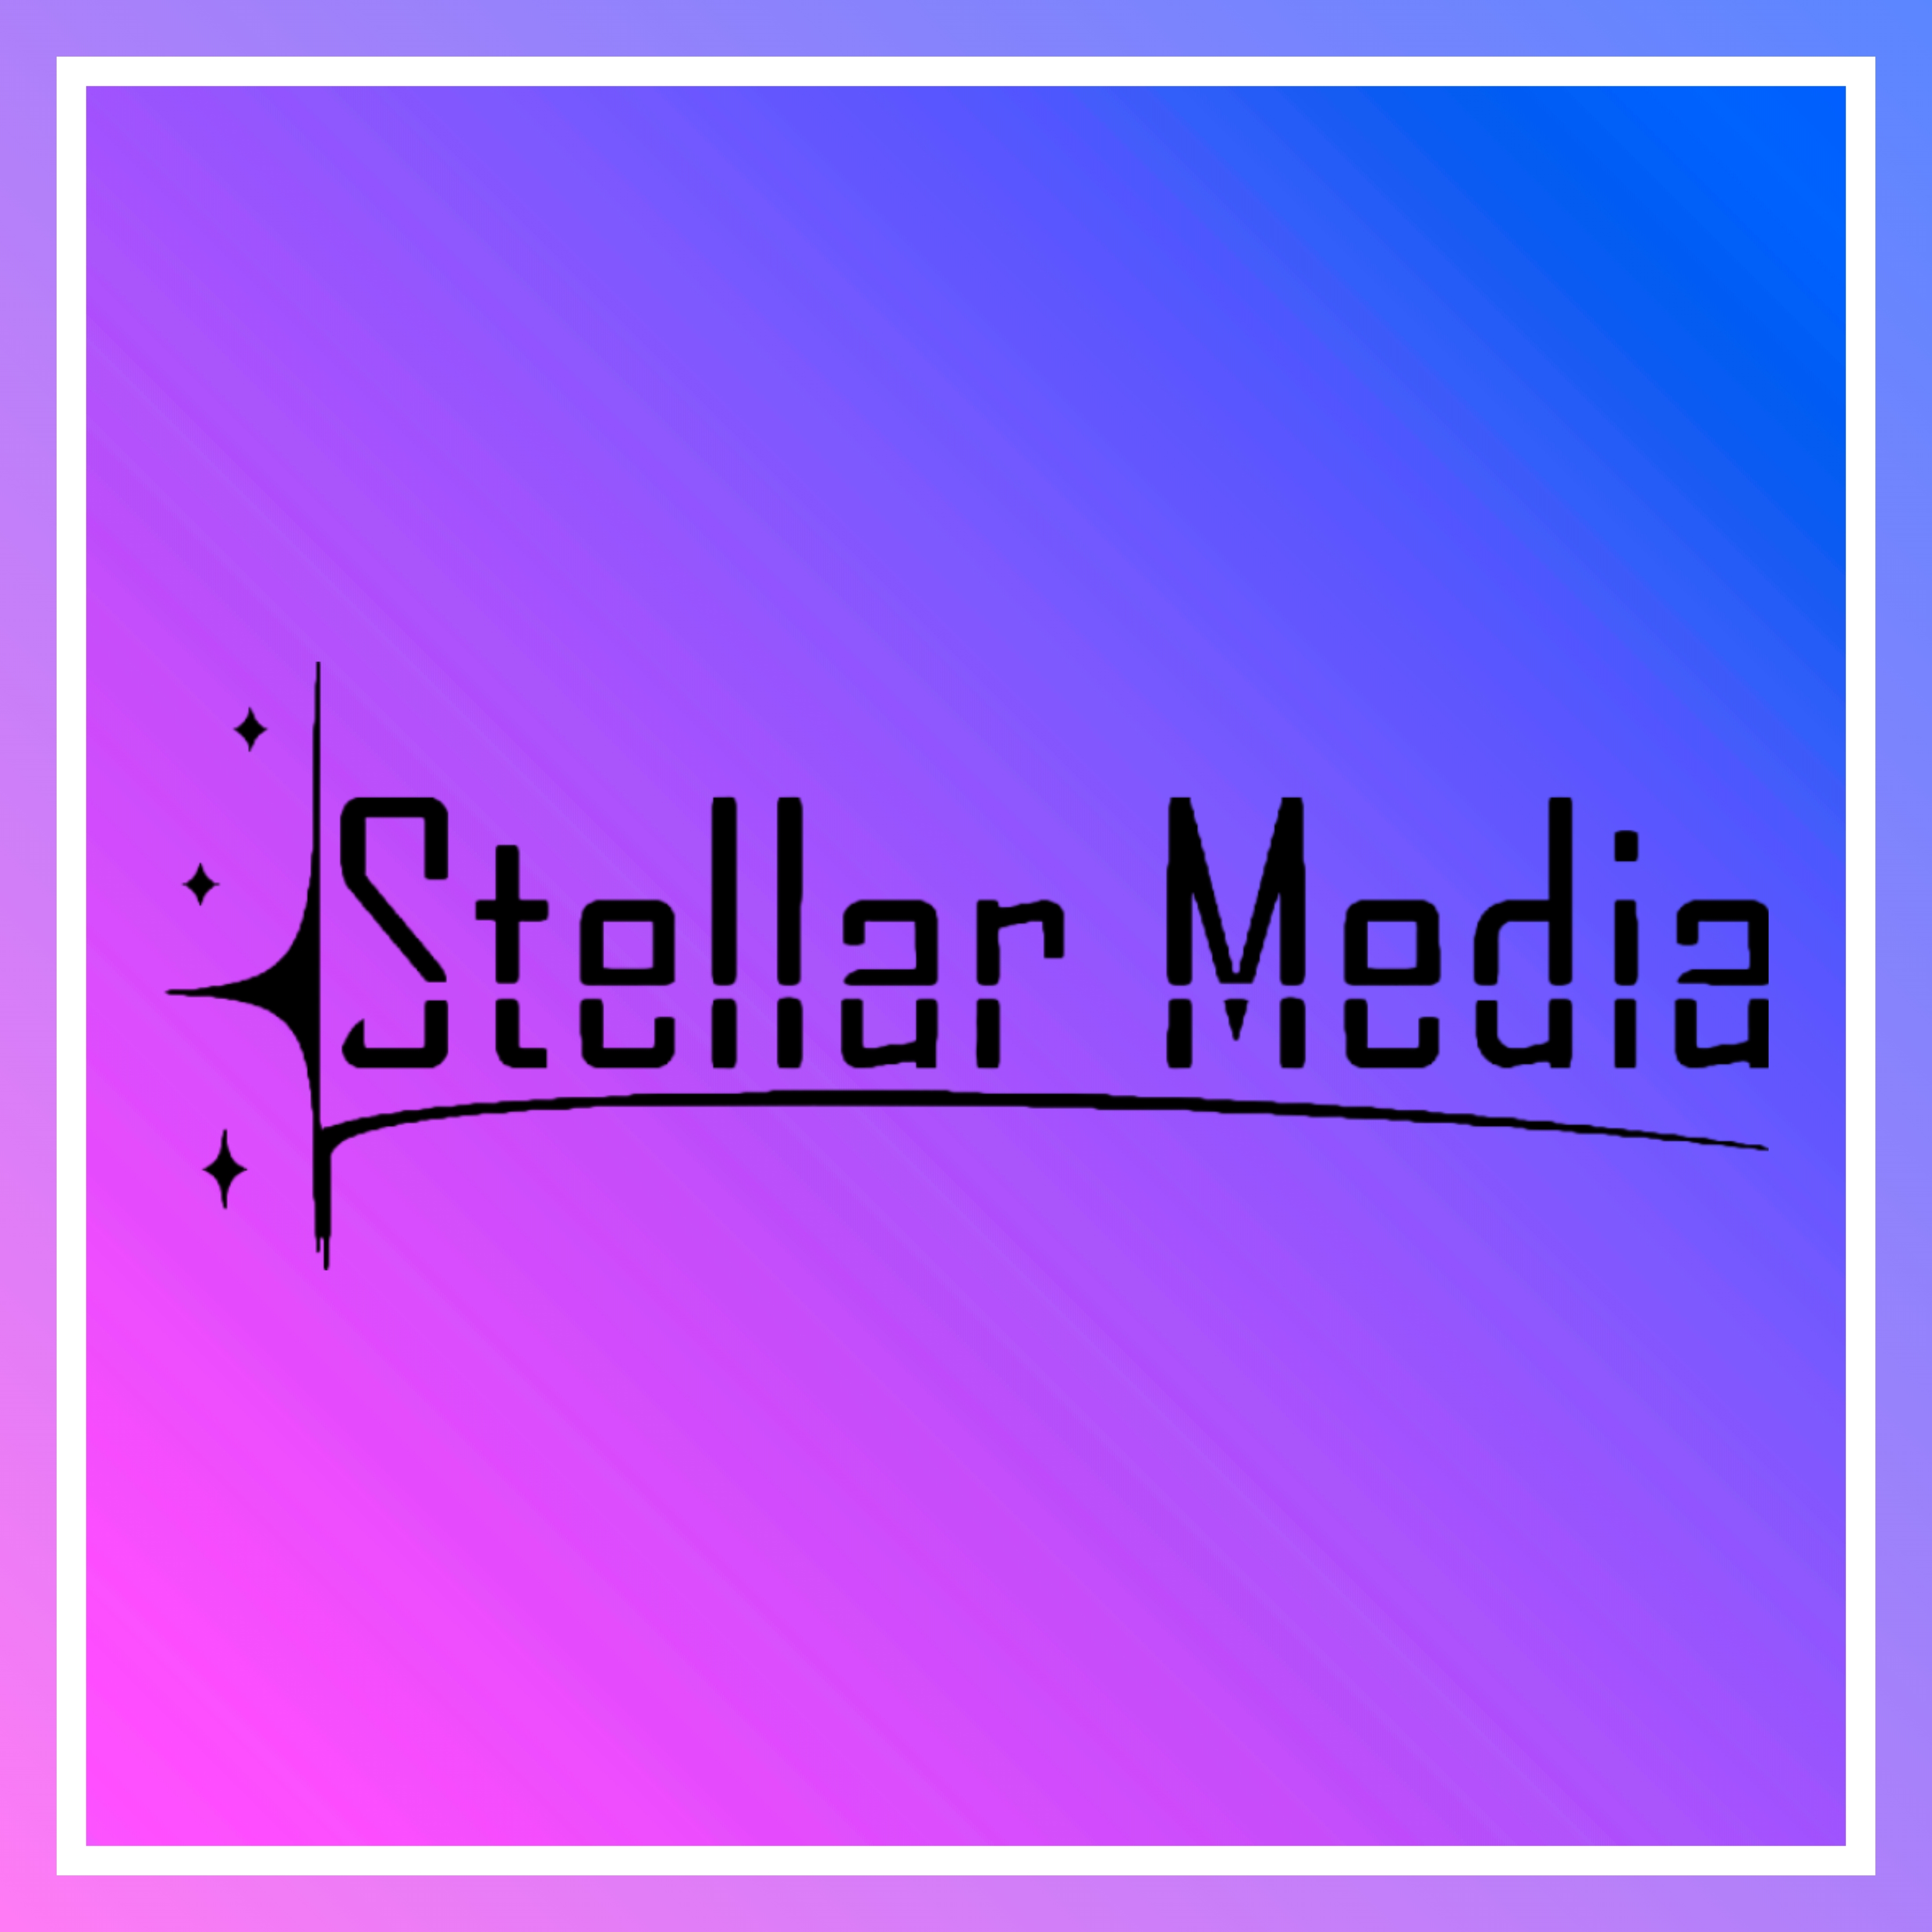 Stellar média